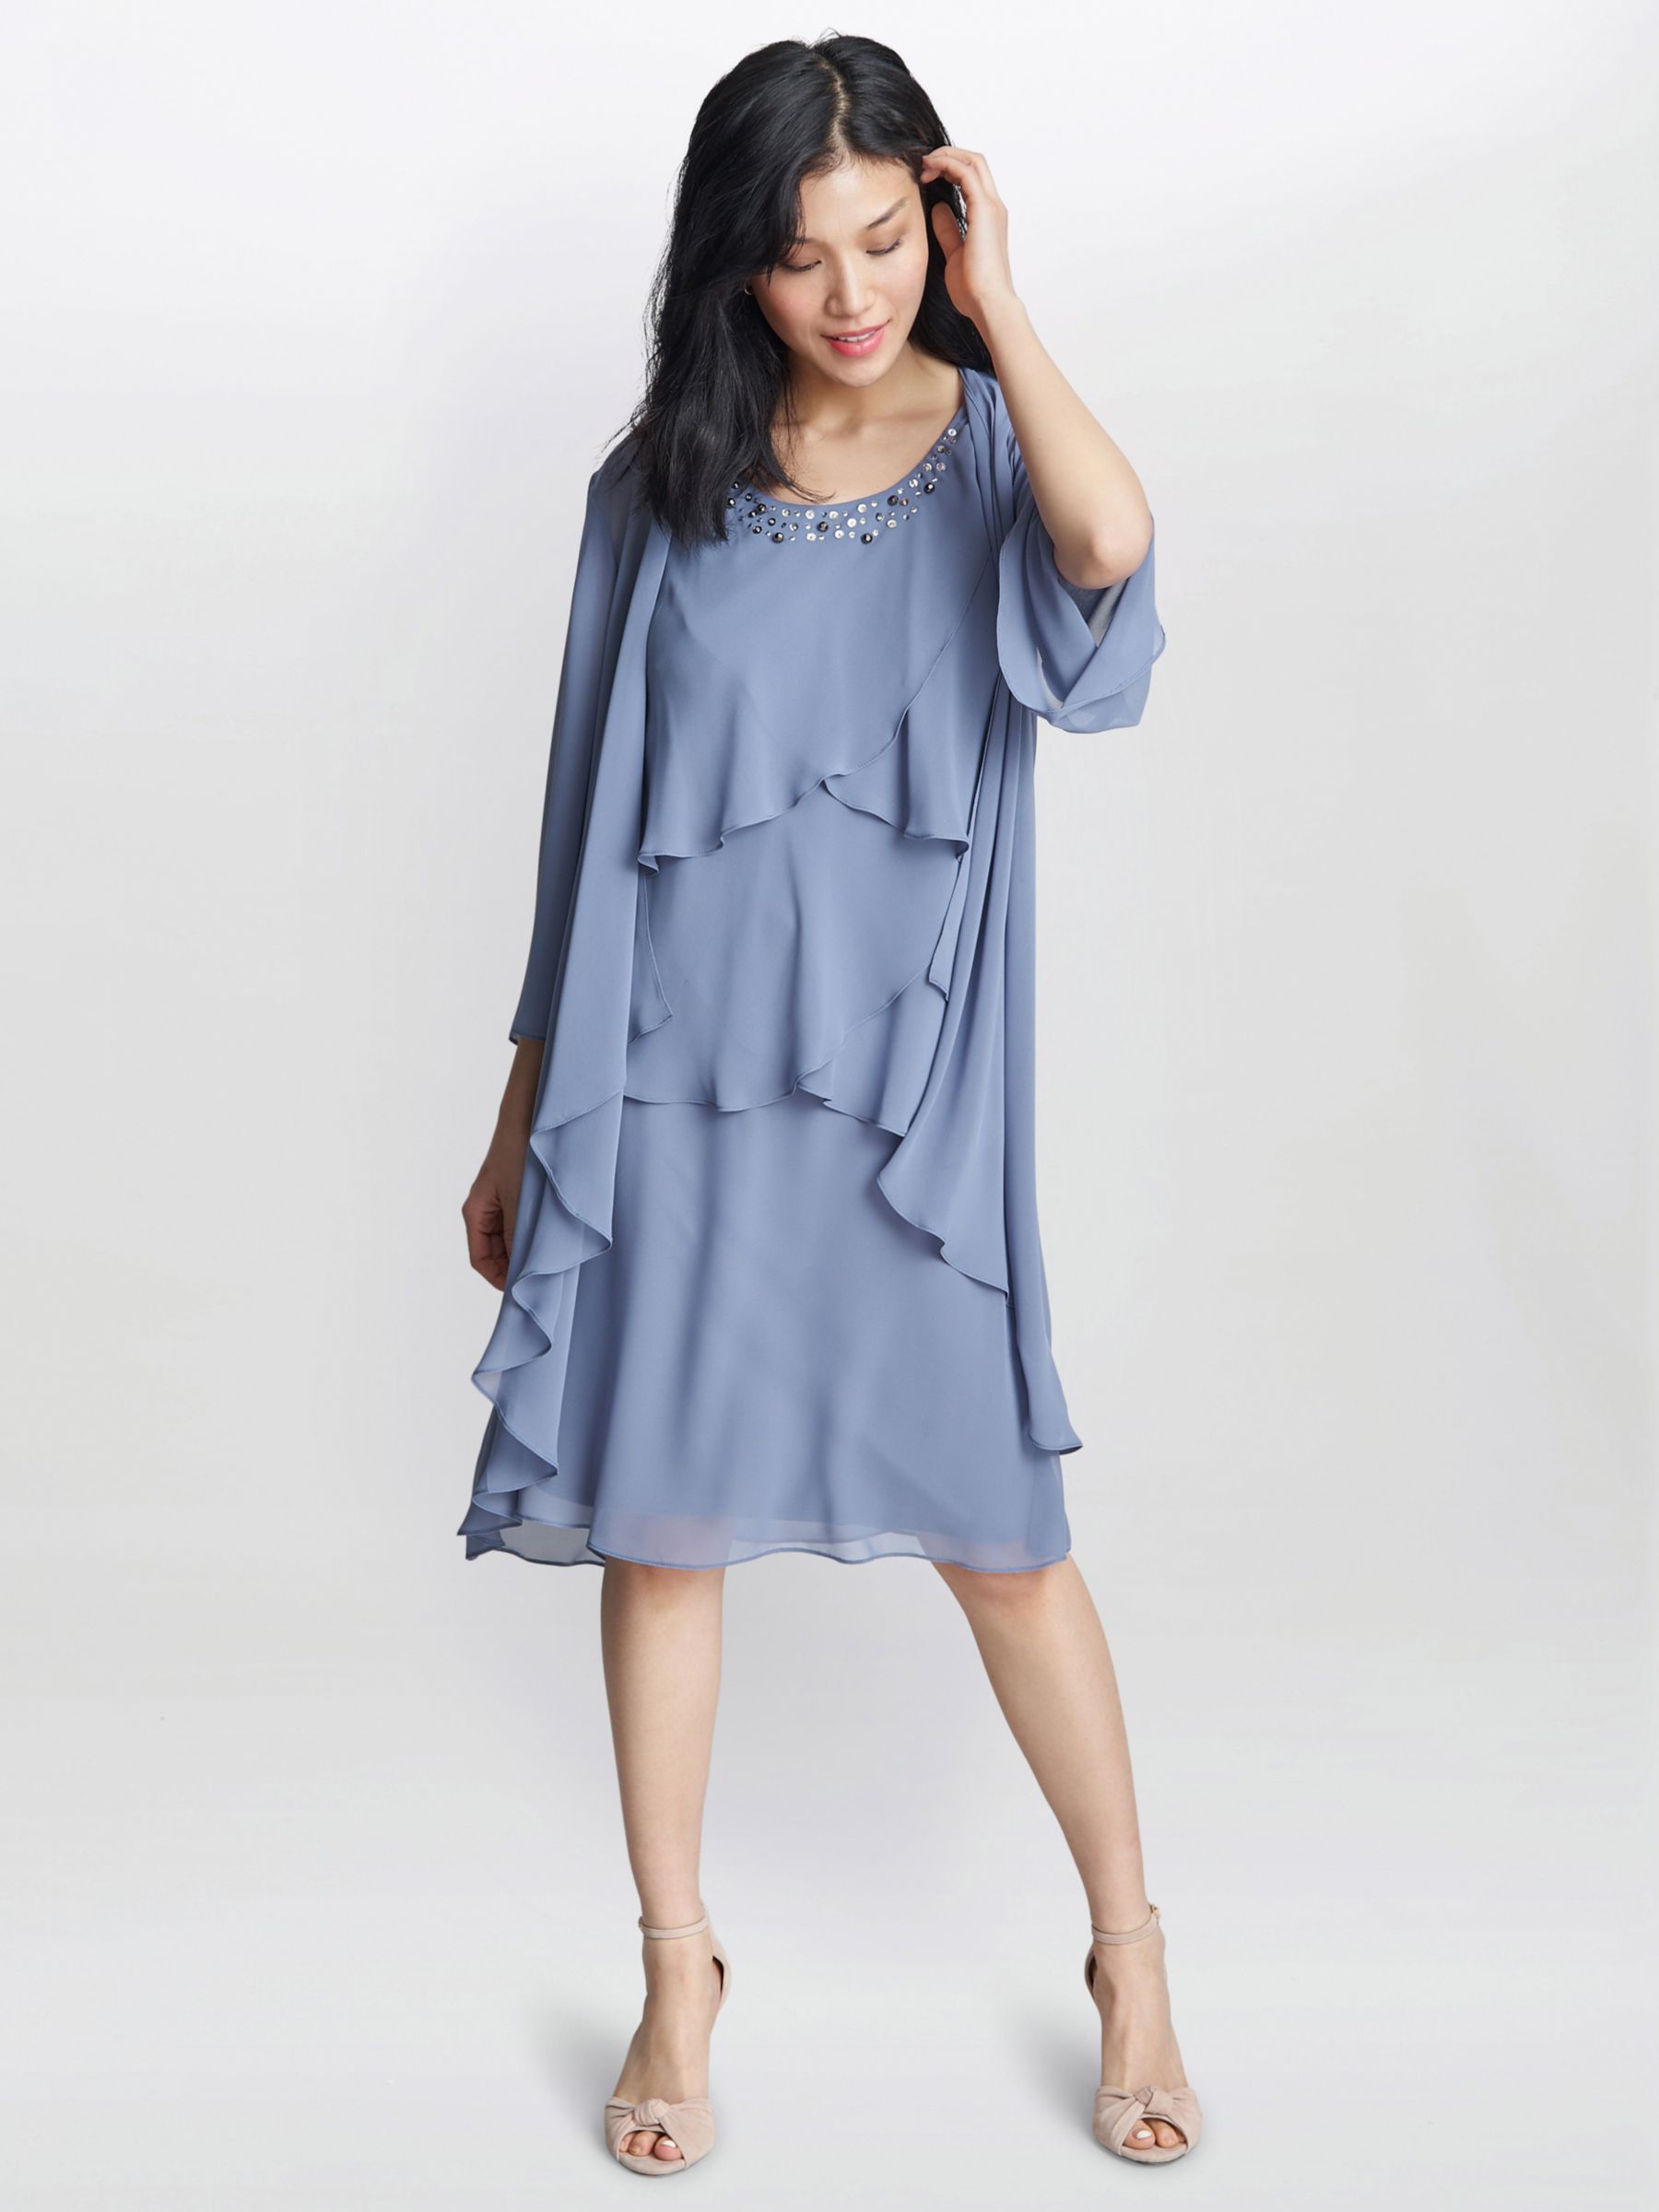 Gina Bacconi Lois Jacket and Embellished Dress, Perri, 10